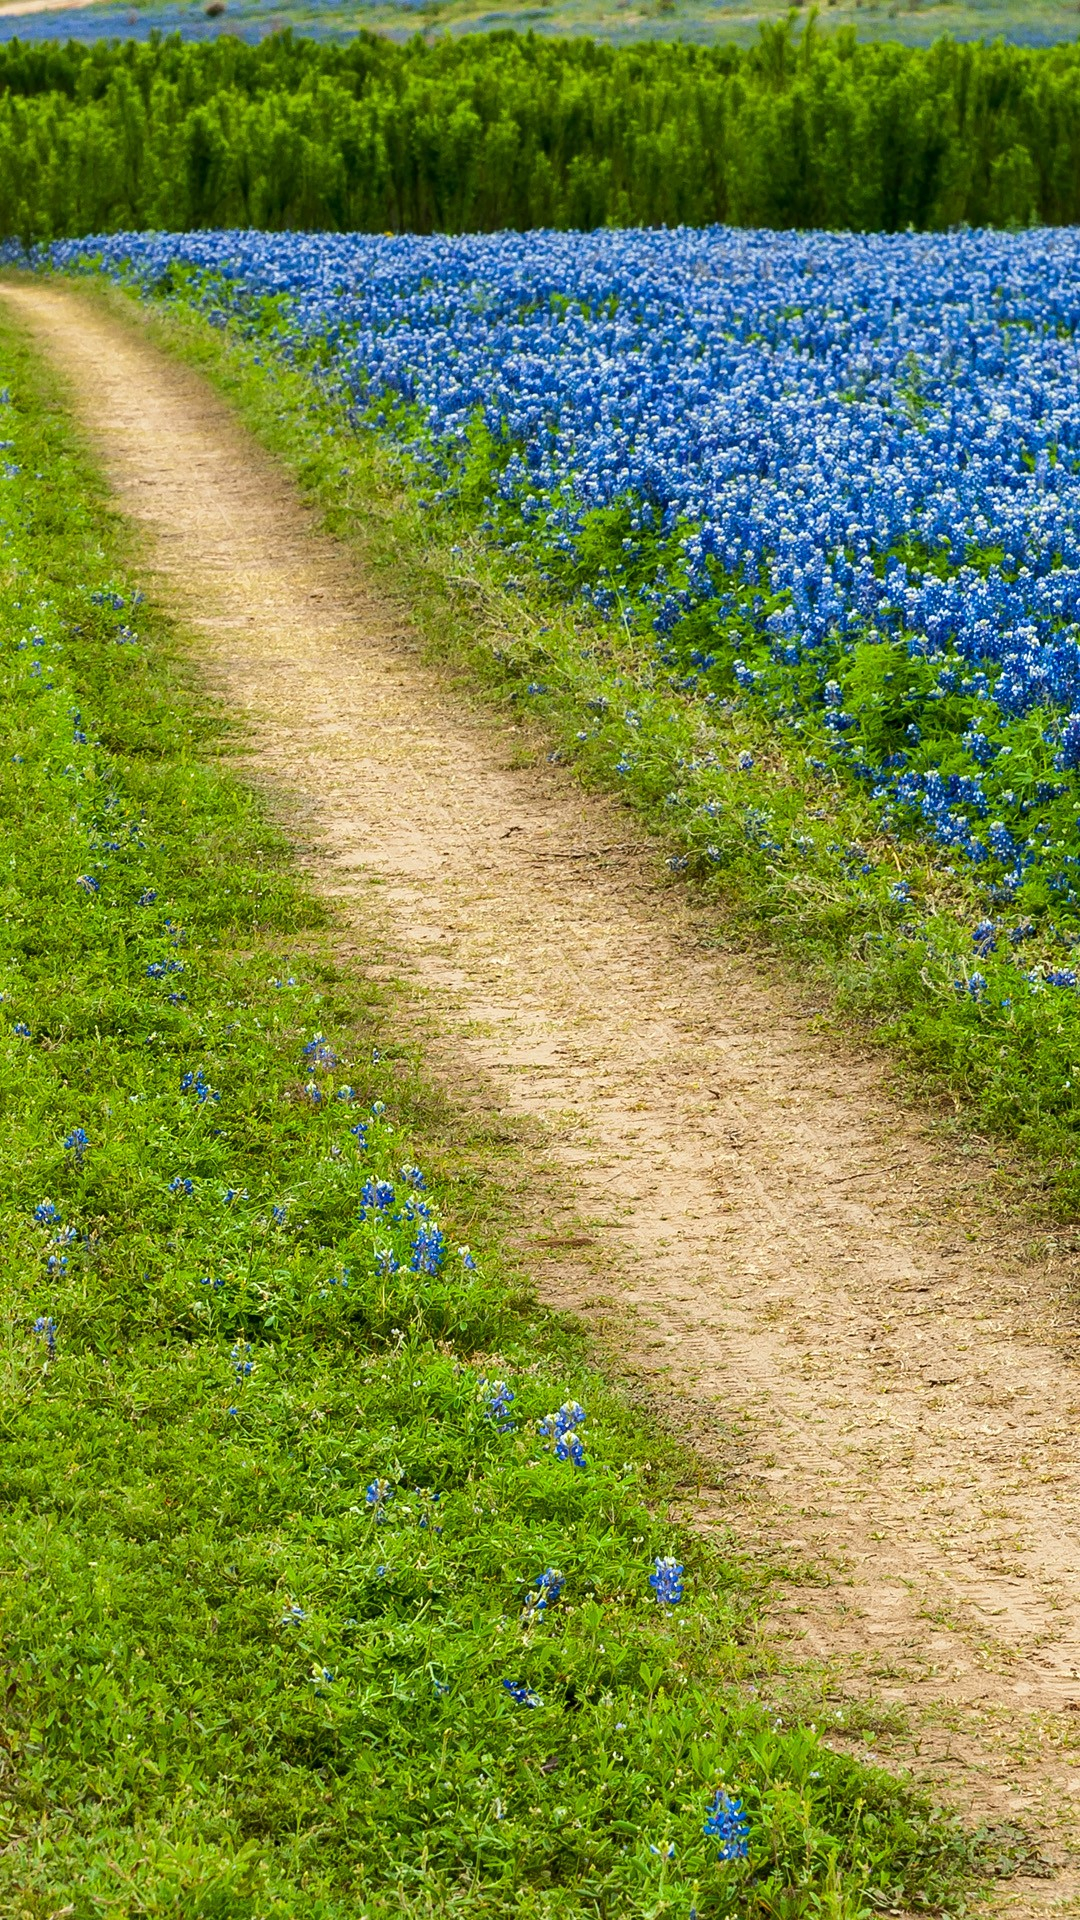 1080x1920 Texas bluebonnet wildflowers field with road, Muleshoe Bend Recreation Area, USA | Windows 10 Spotlight Images